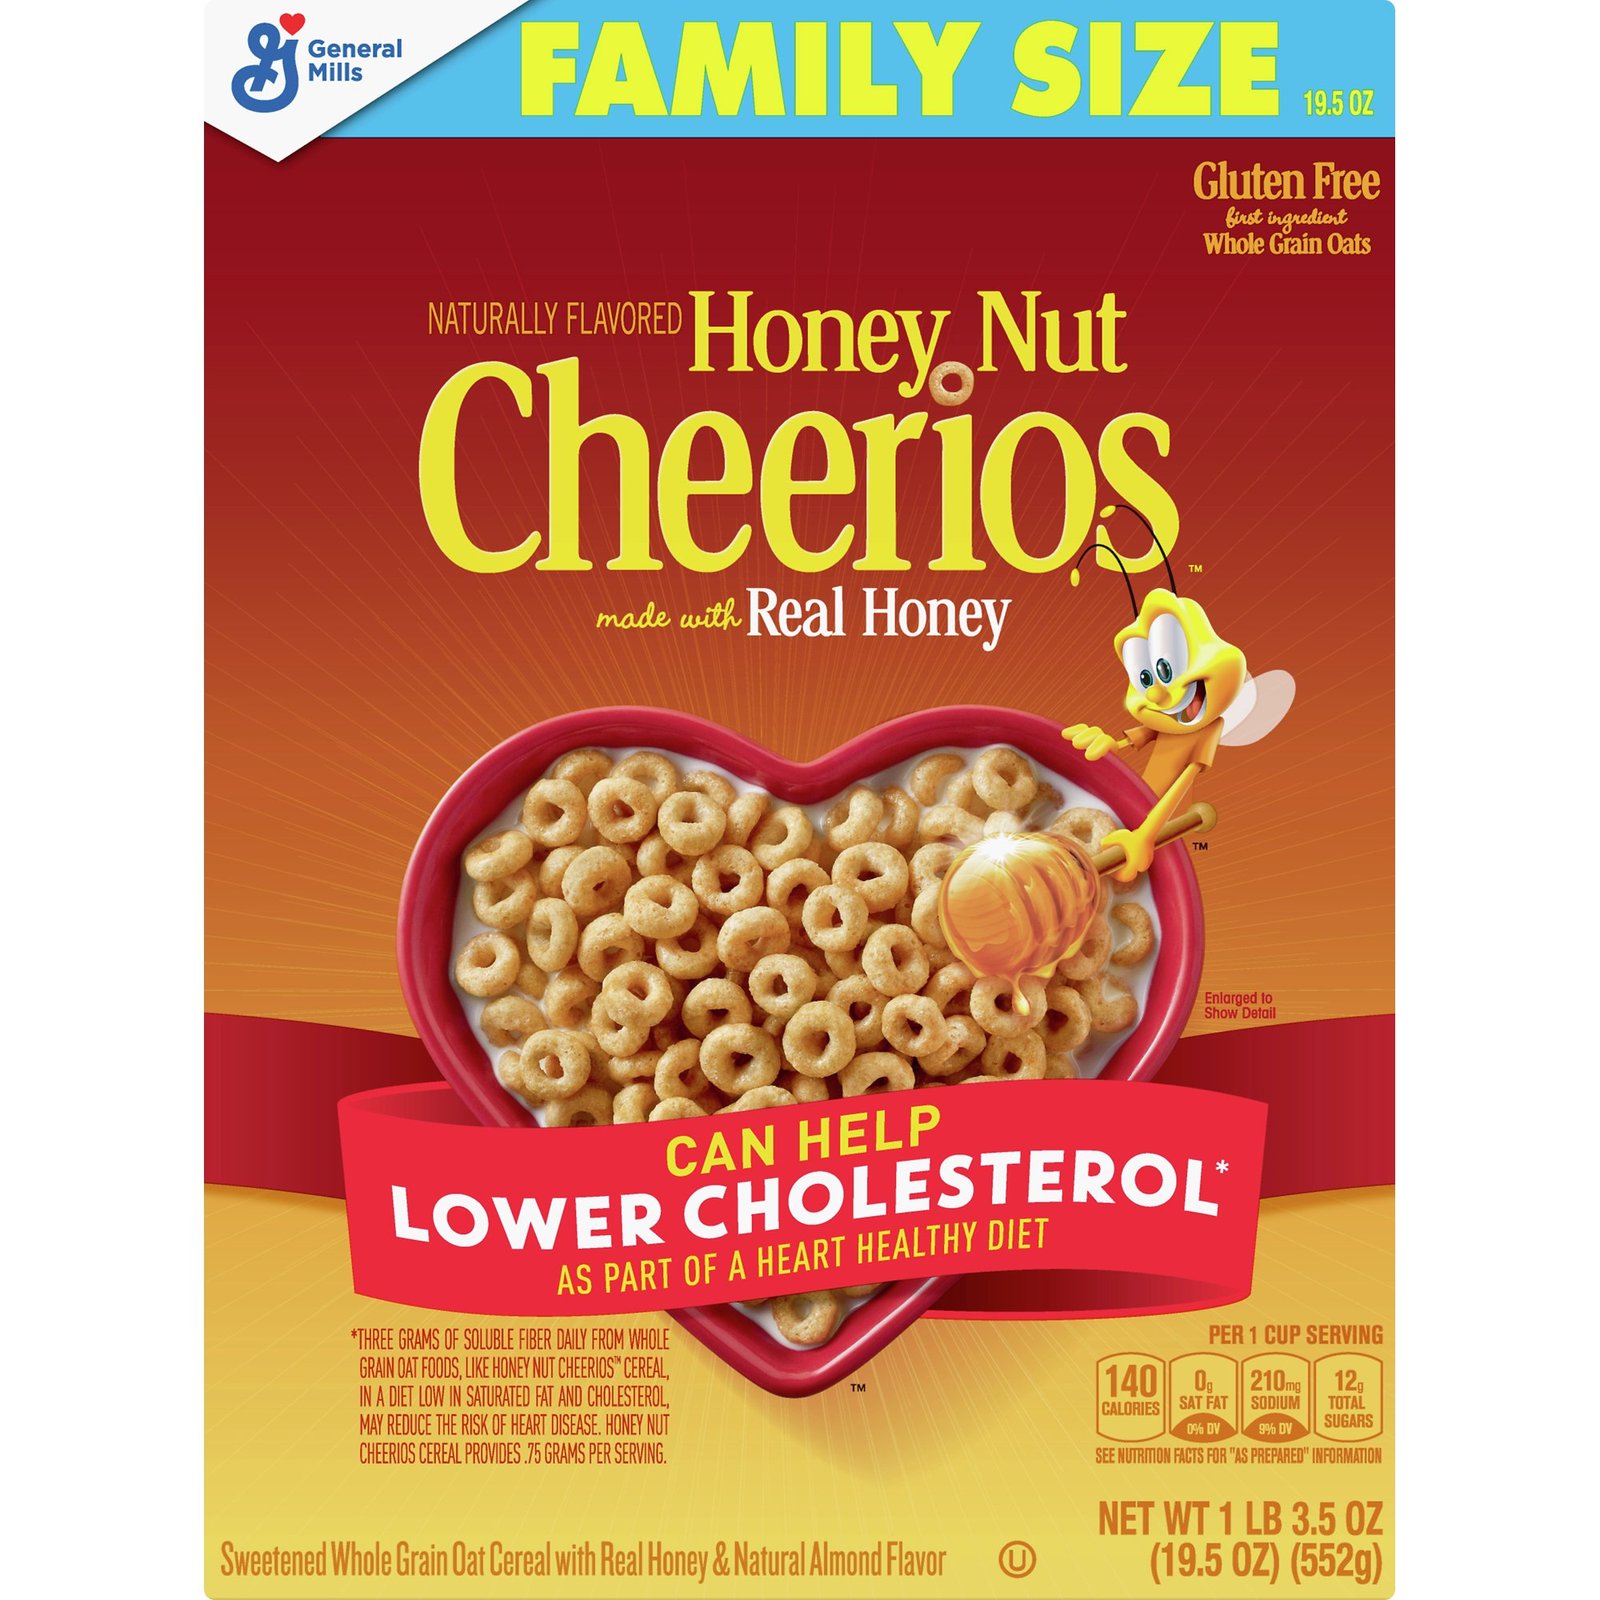 Cheerios cereal box